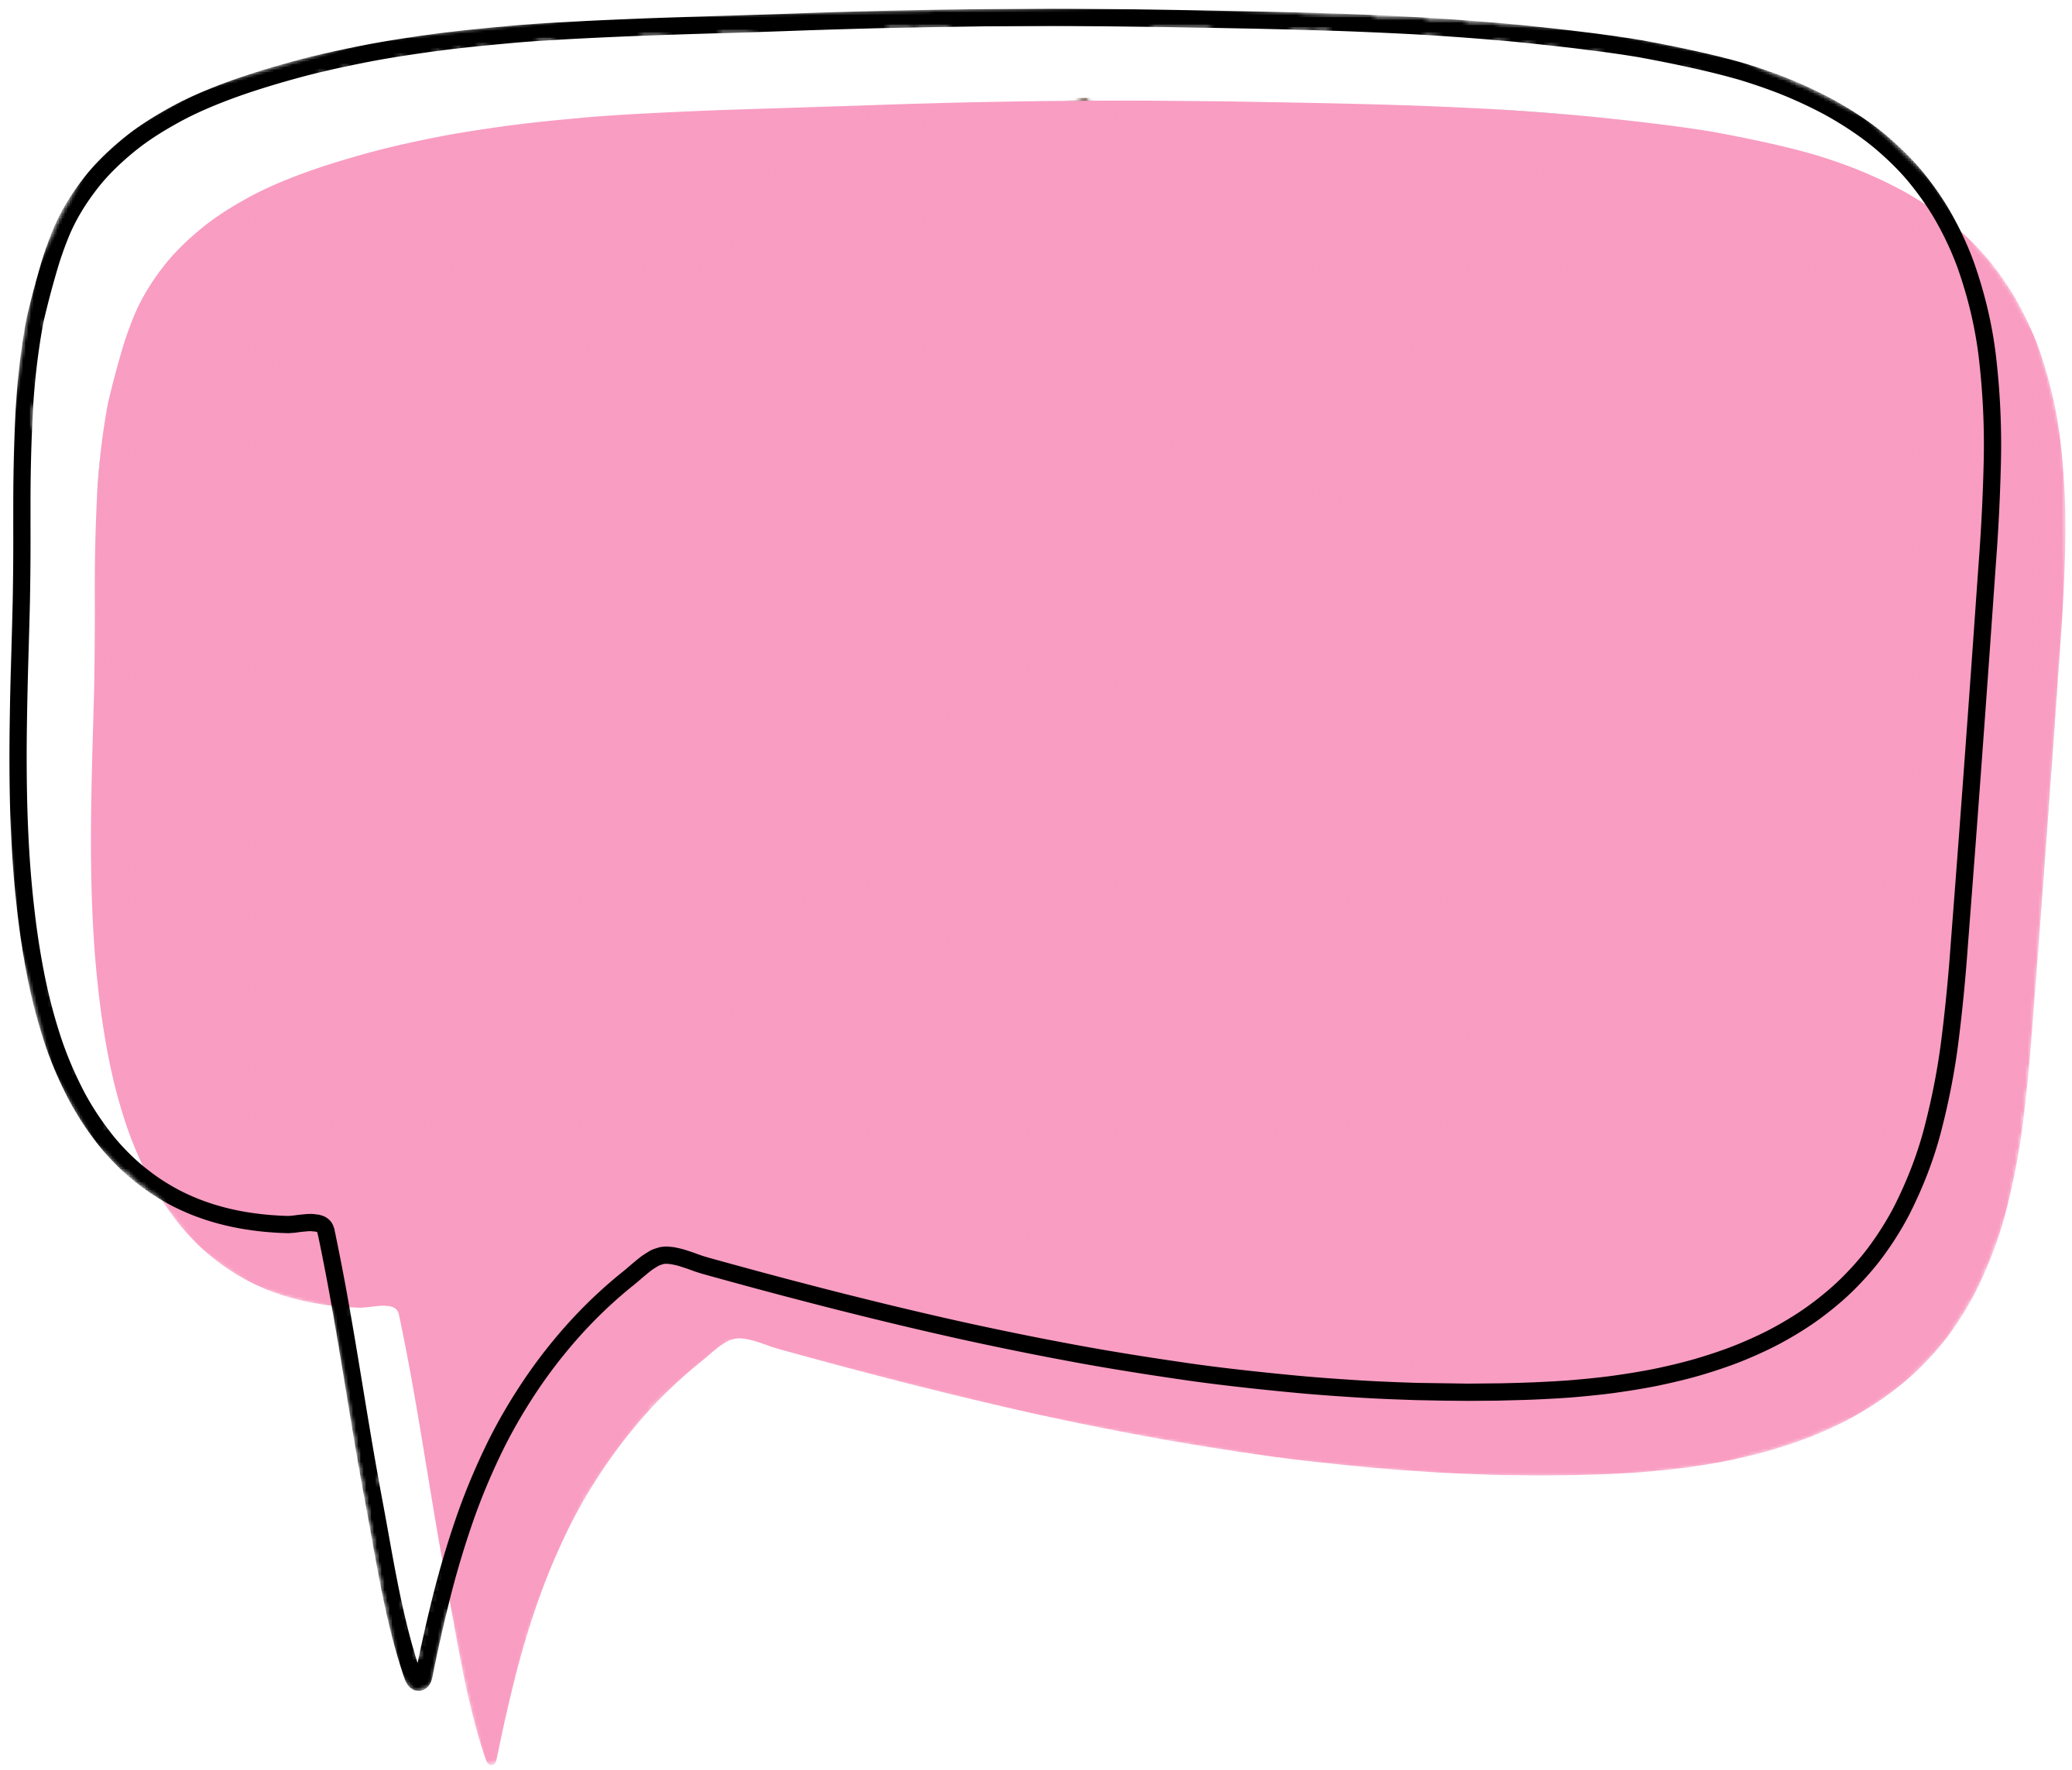 speechbubble-rosa-rose-pink-speech-sticker-by-capinom